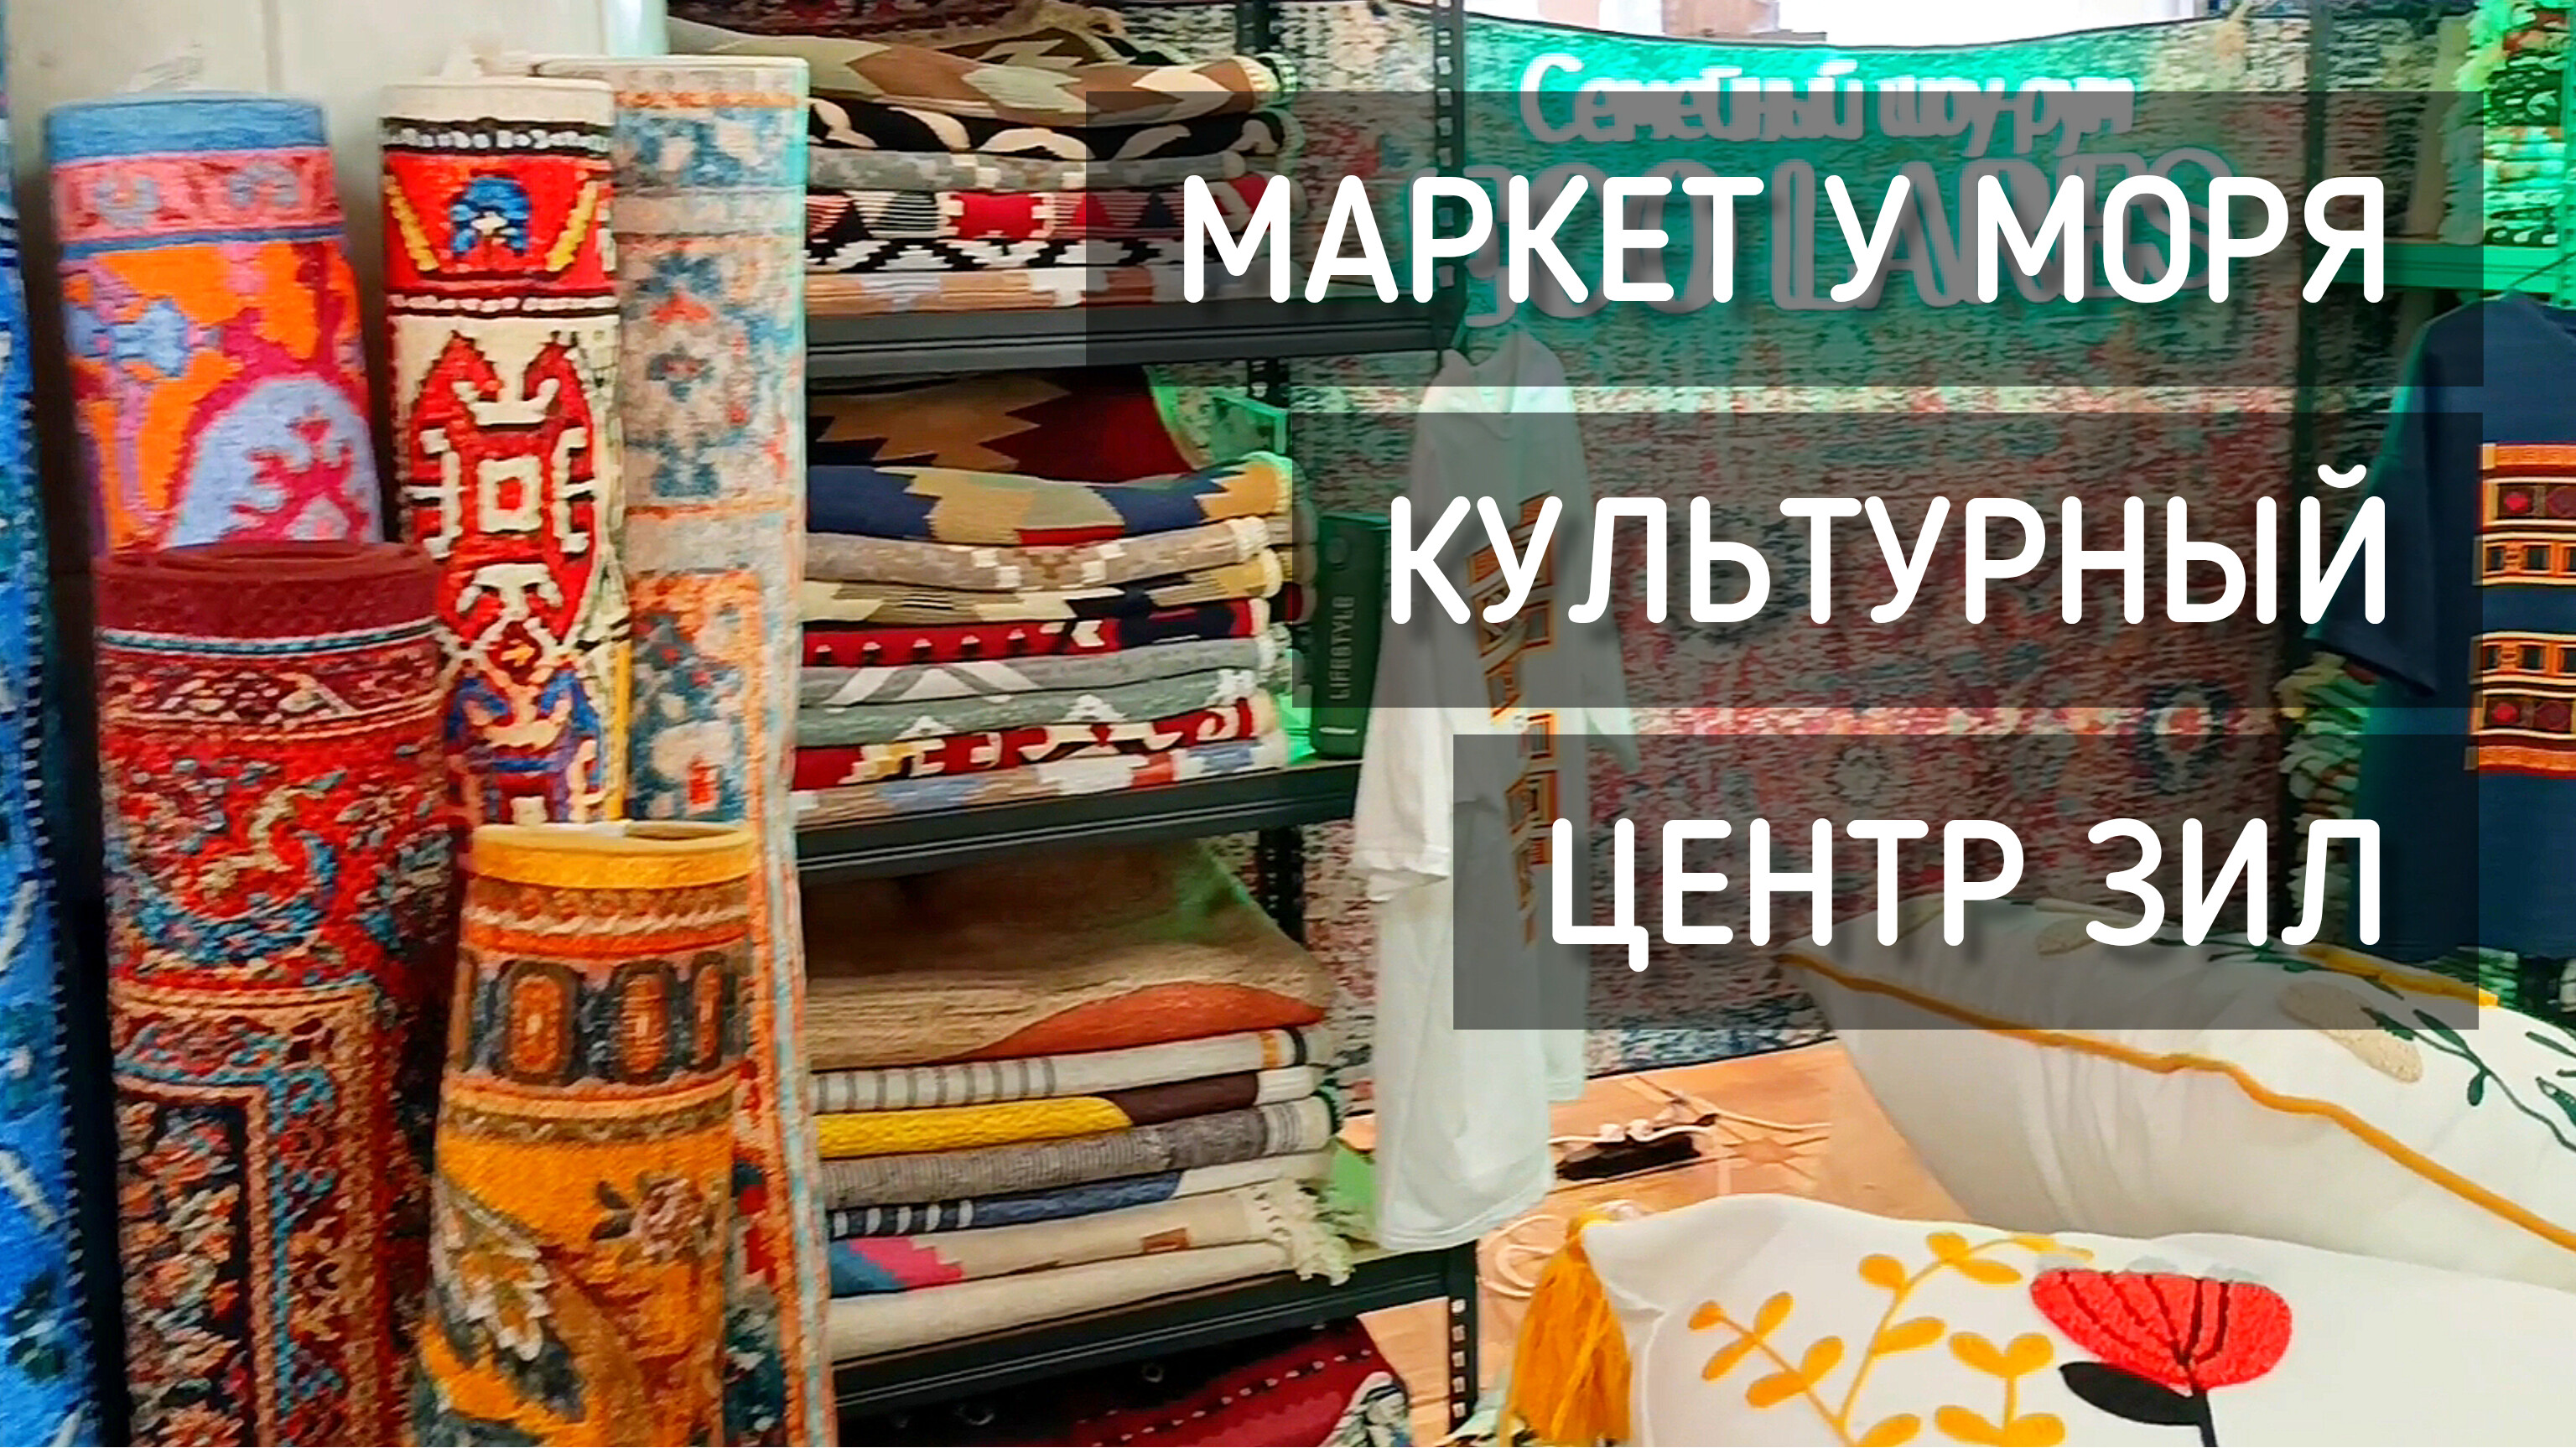 Маркет у моря. Культурный центр ЗИЛ. Локальные бренды / Market by the sea #москва #маркетуморя #зил